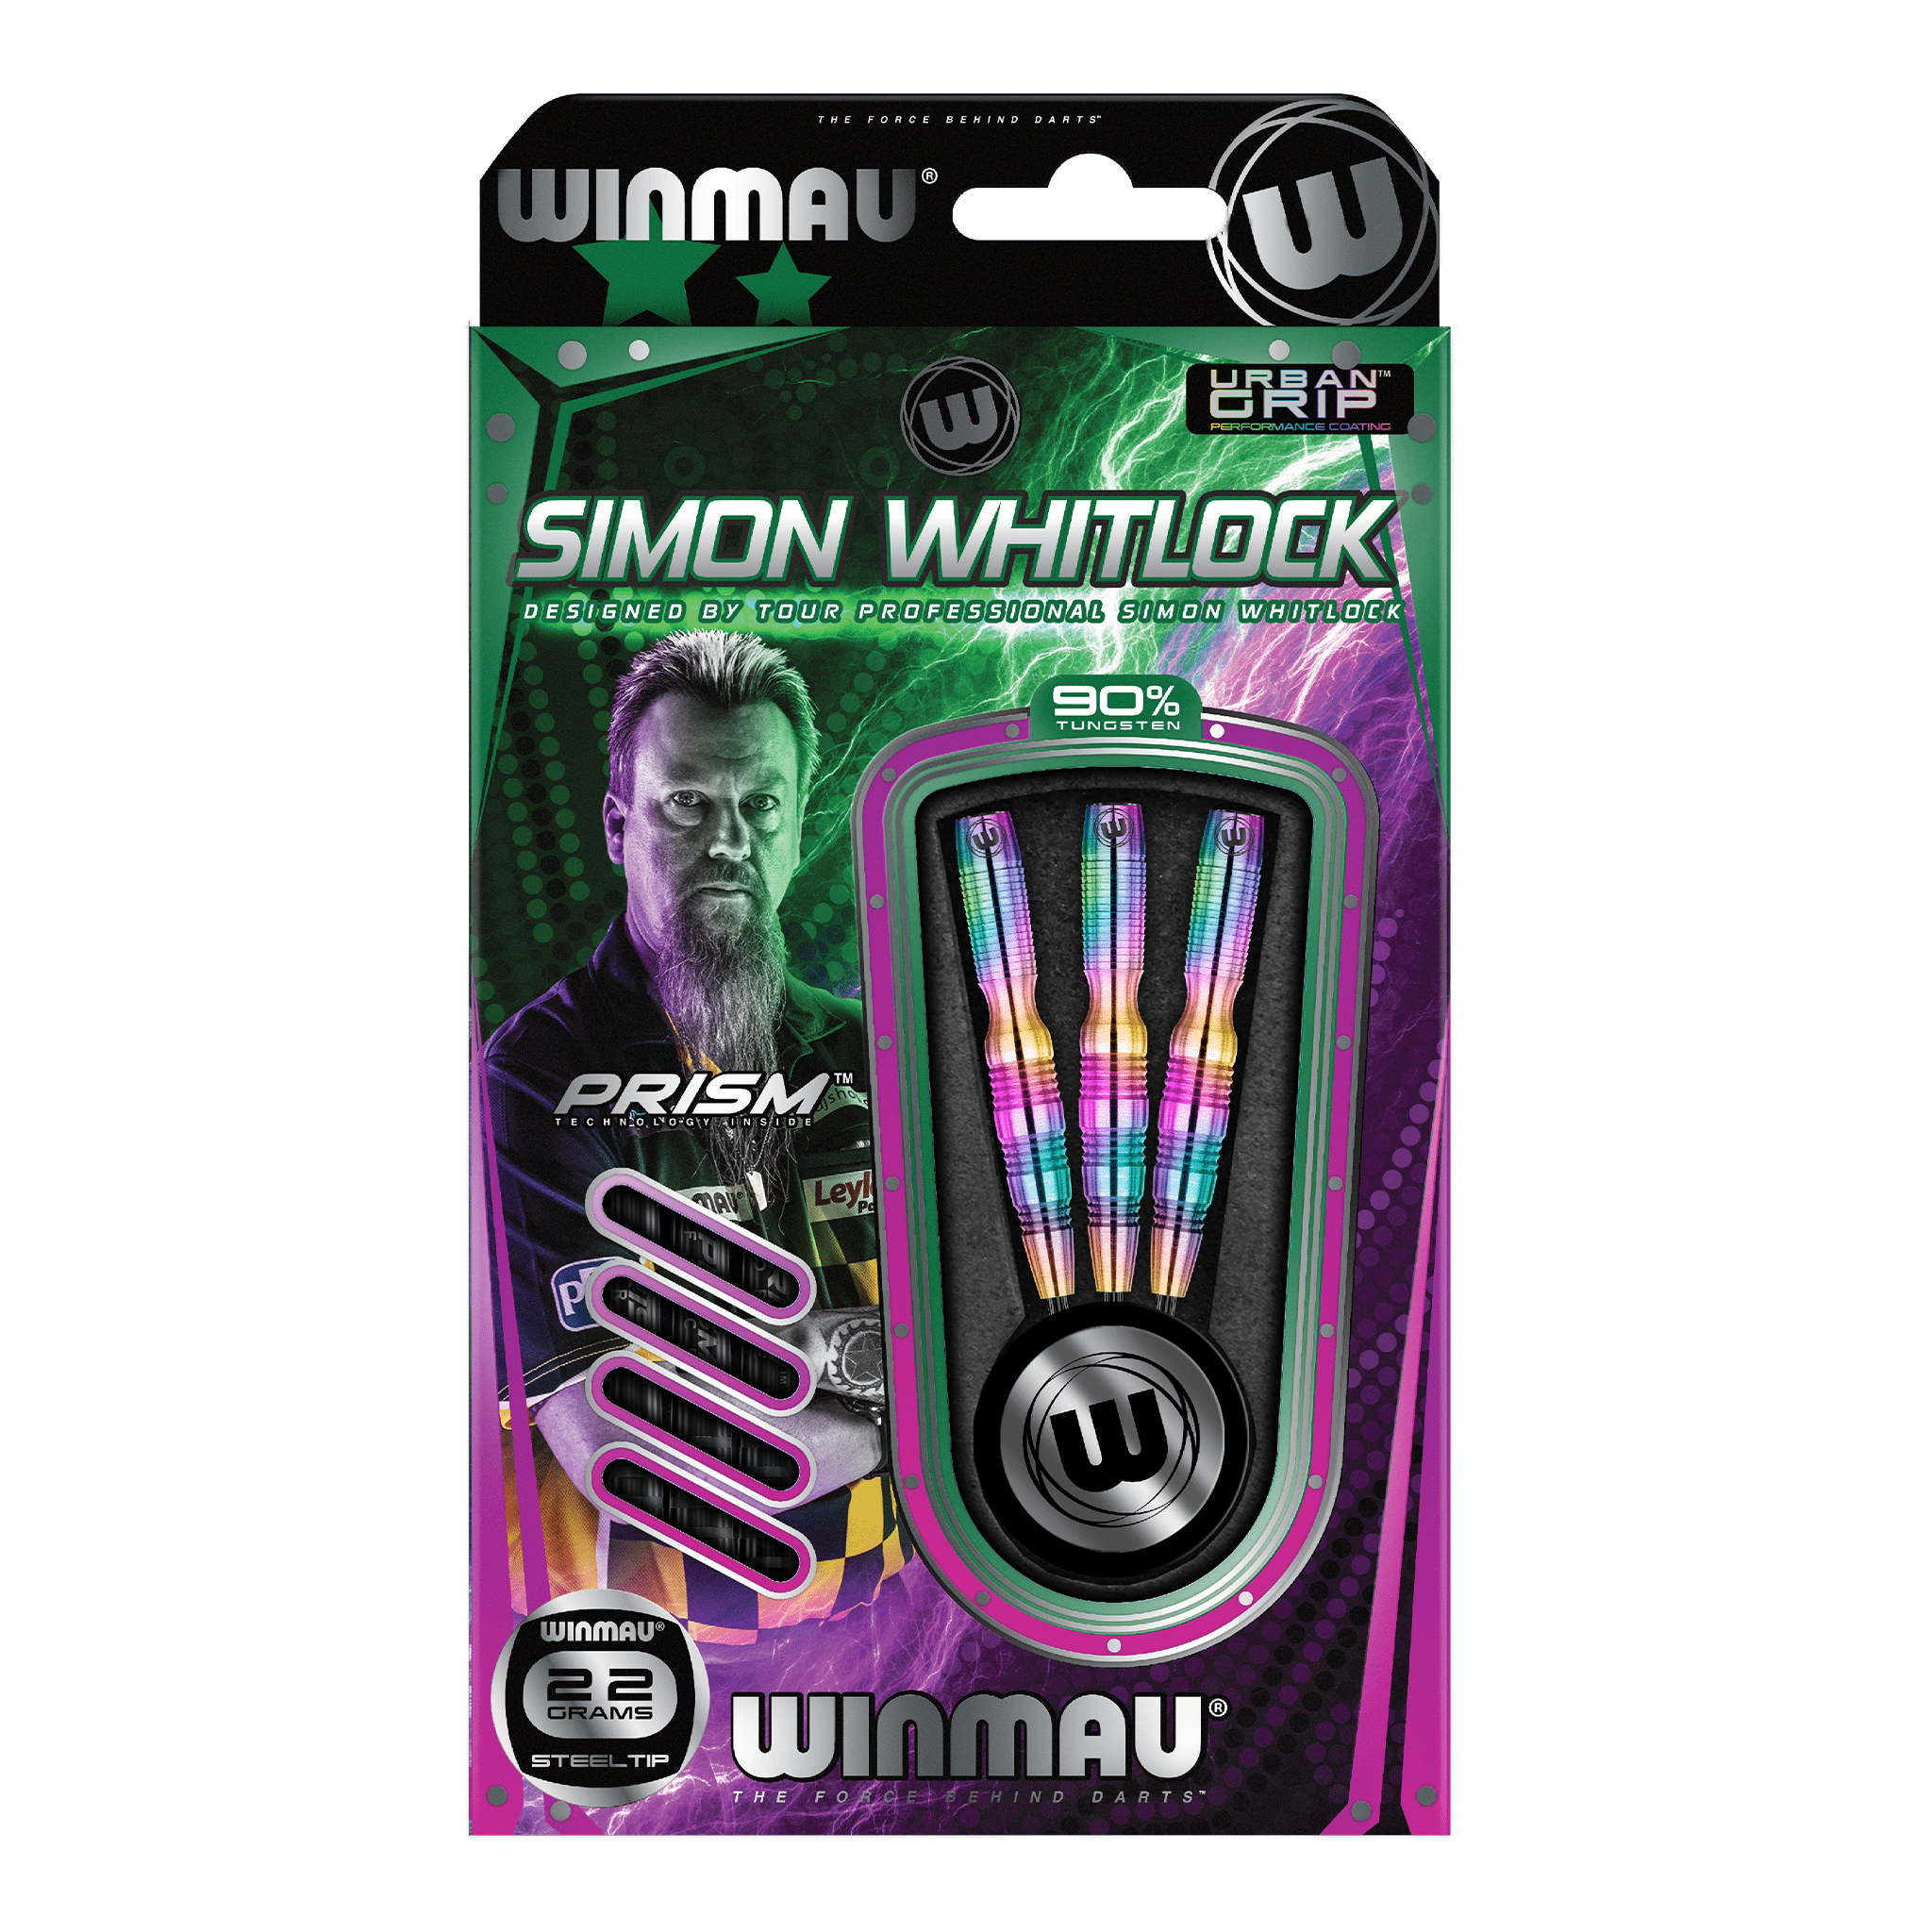 Winmau Simon Whitlock Urban Grip Steel Tip Darts - 90% Tungsten - 22 Grams Darts